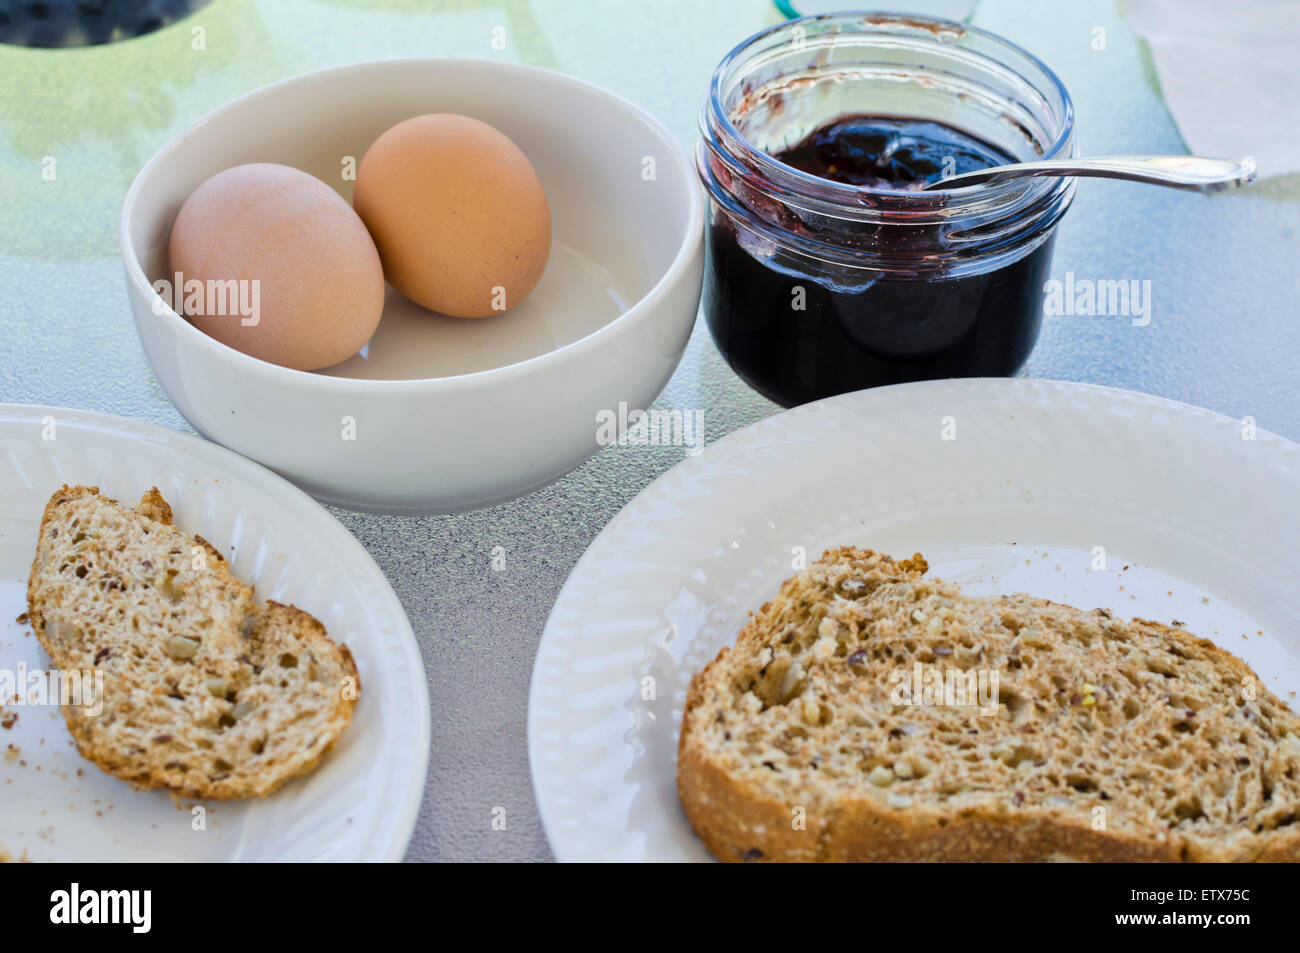 Simple breakfast of boiled eggs, slice of multigrain toast, and homemade jam. Stock Photo